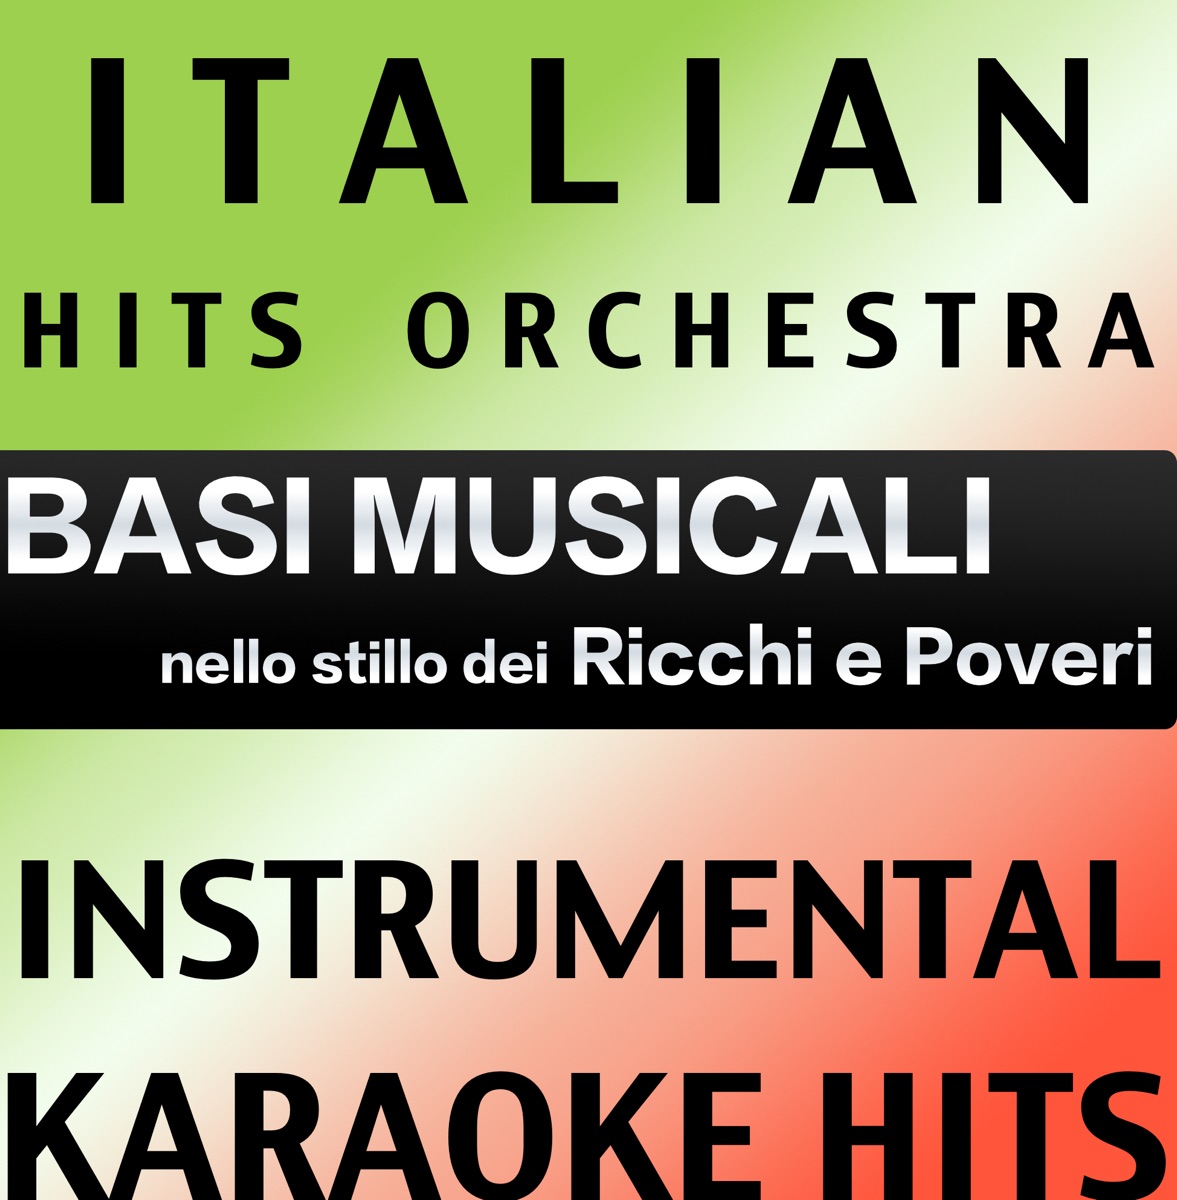 Basi Musicale Nello Stilo dei Angelo Branduardi (Instrumental Karaoke  Tracks) - Album by Italian Hits Orchestra - Apple Music